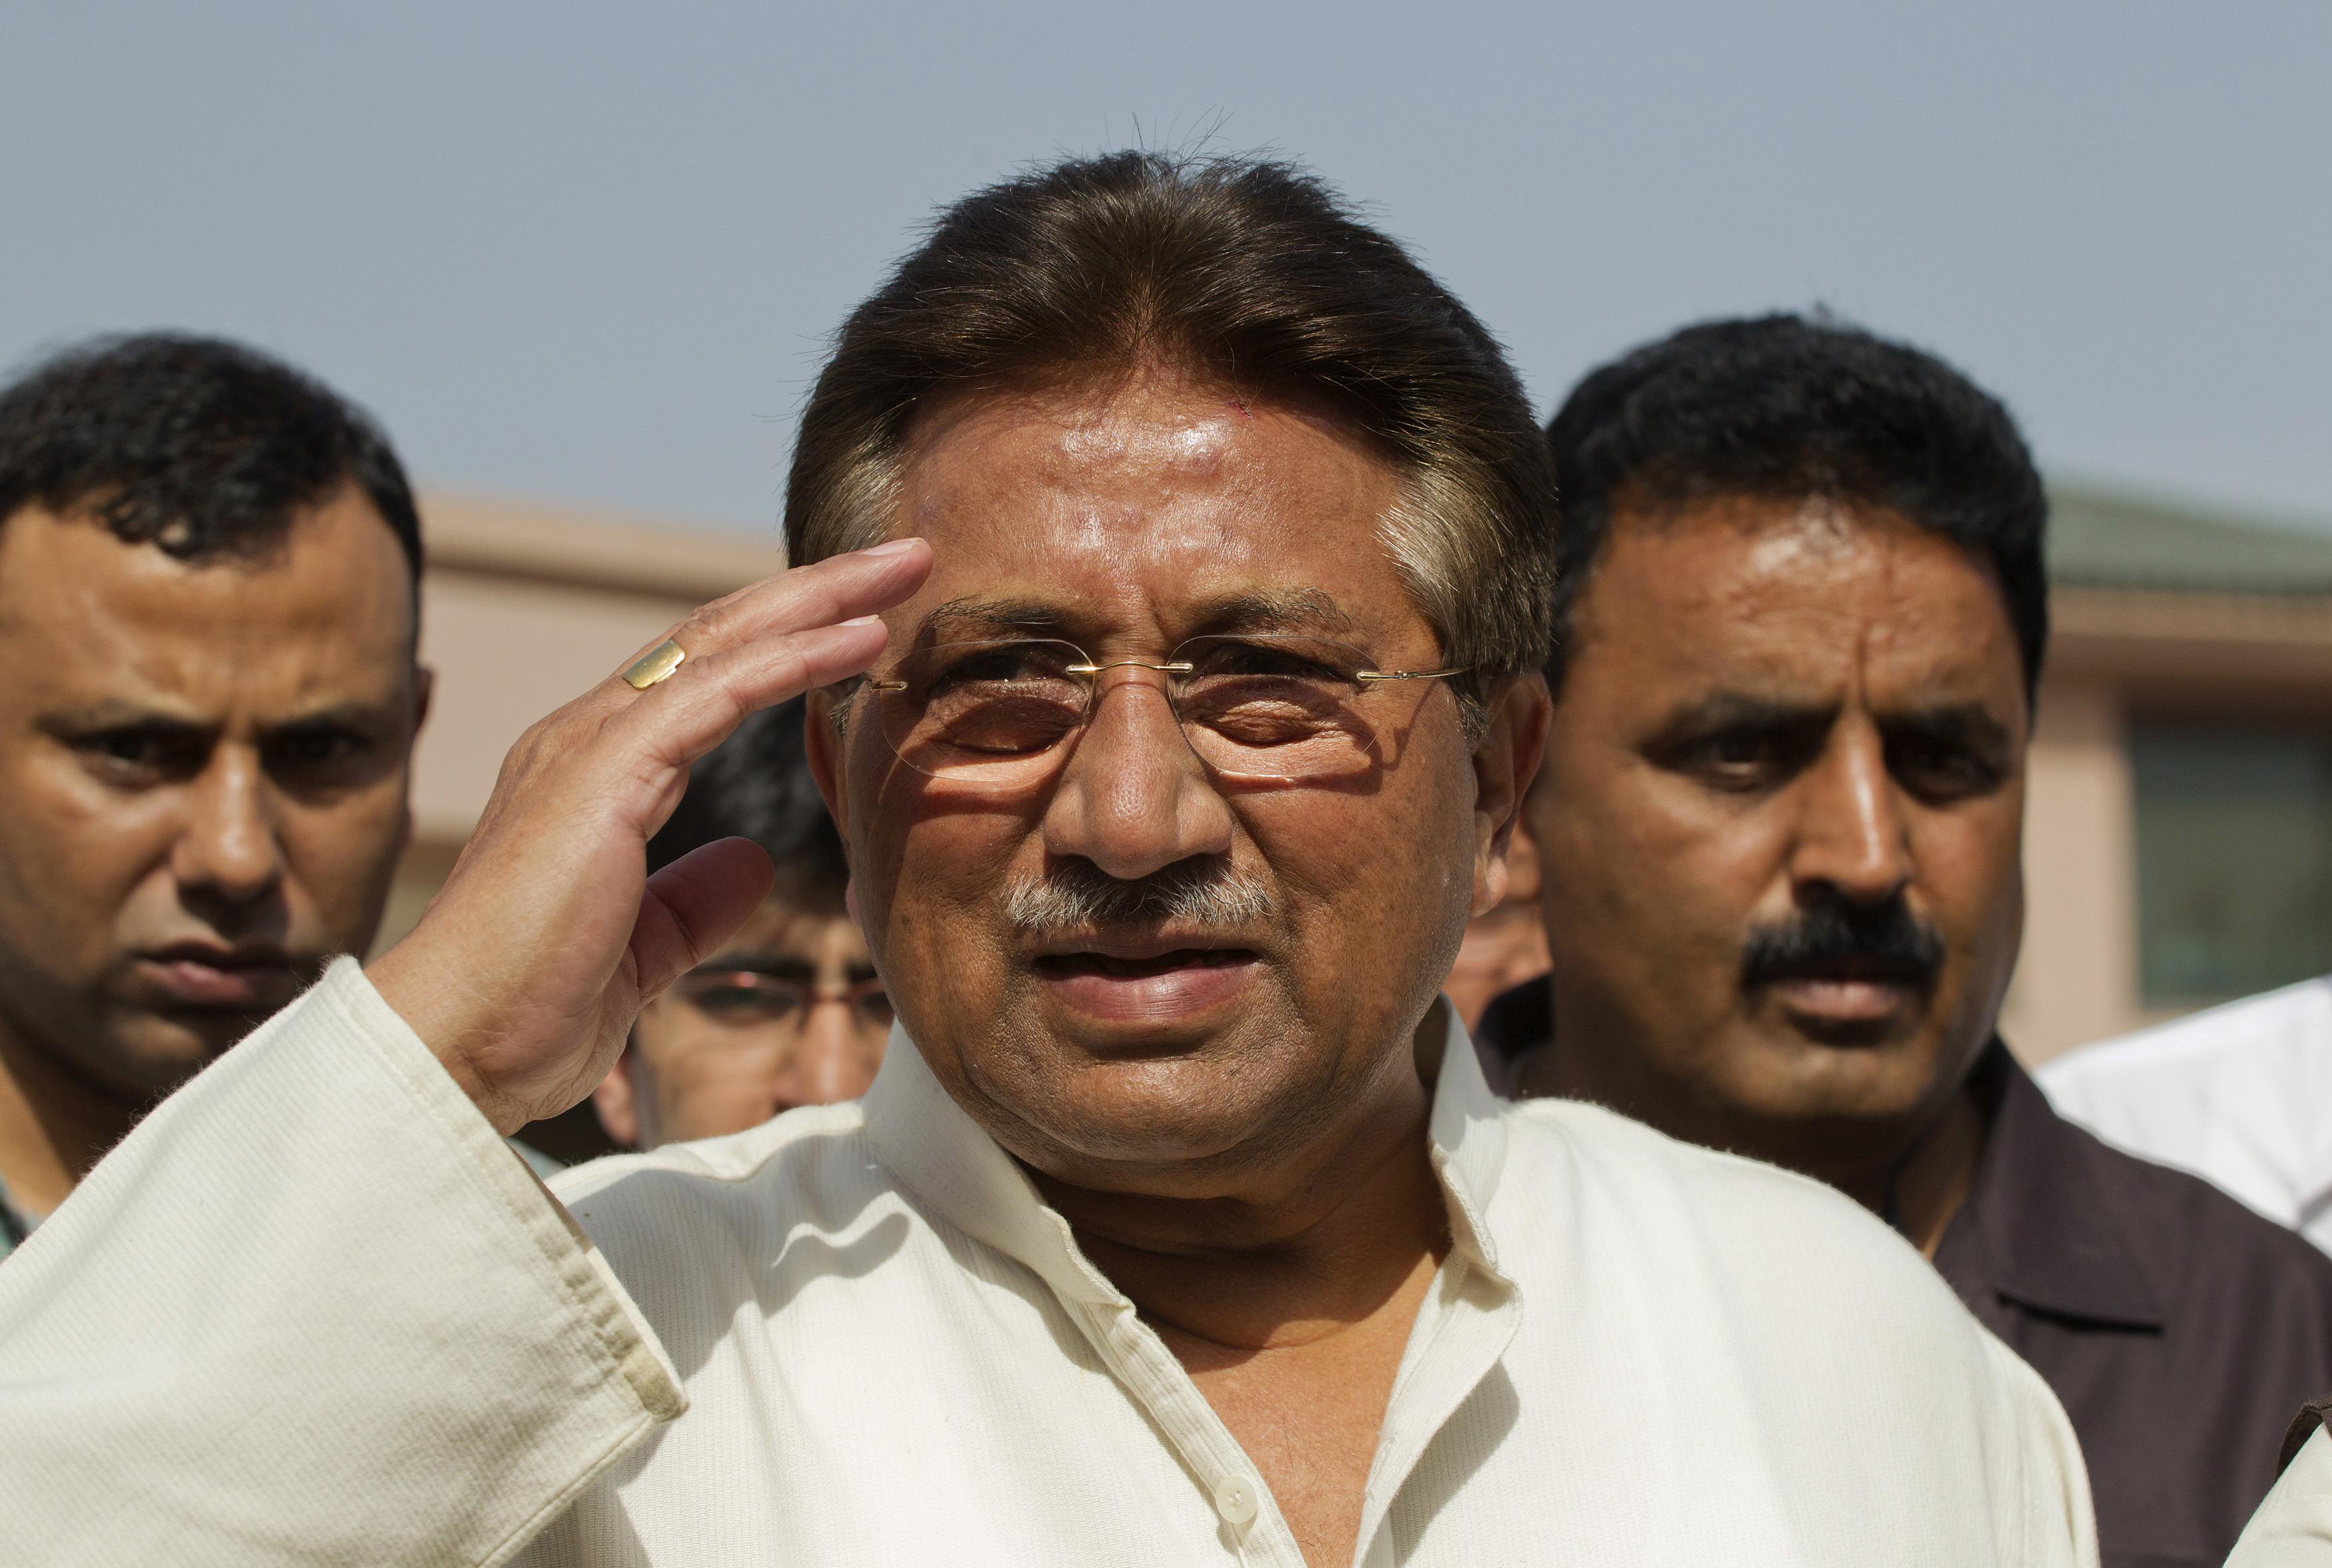 Pakistan's former President Musharraf. Photo: Reuters